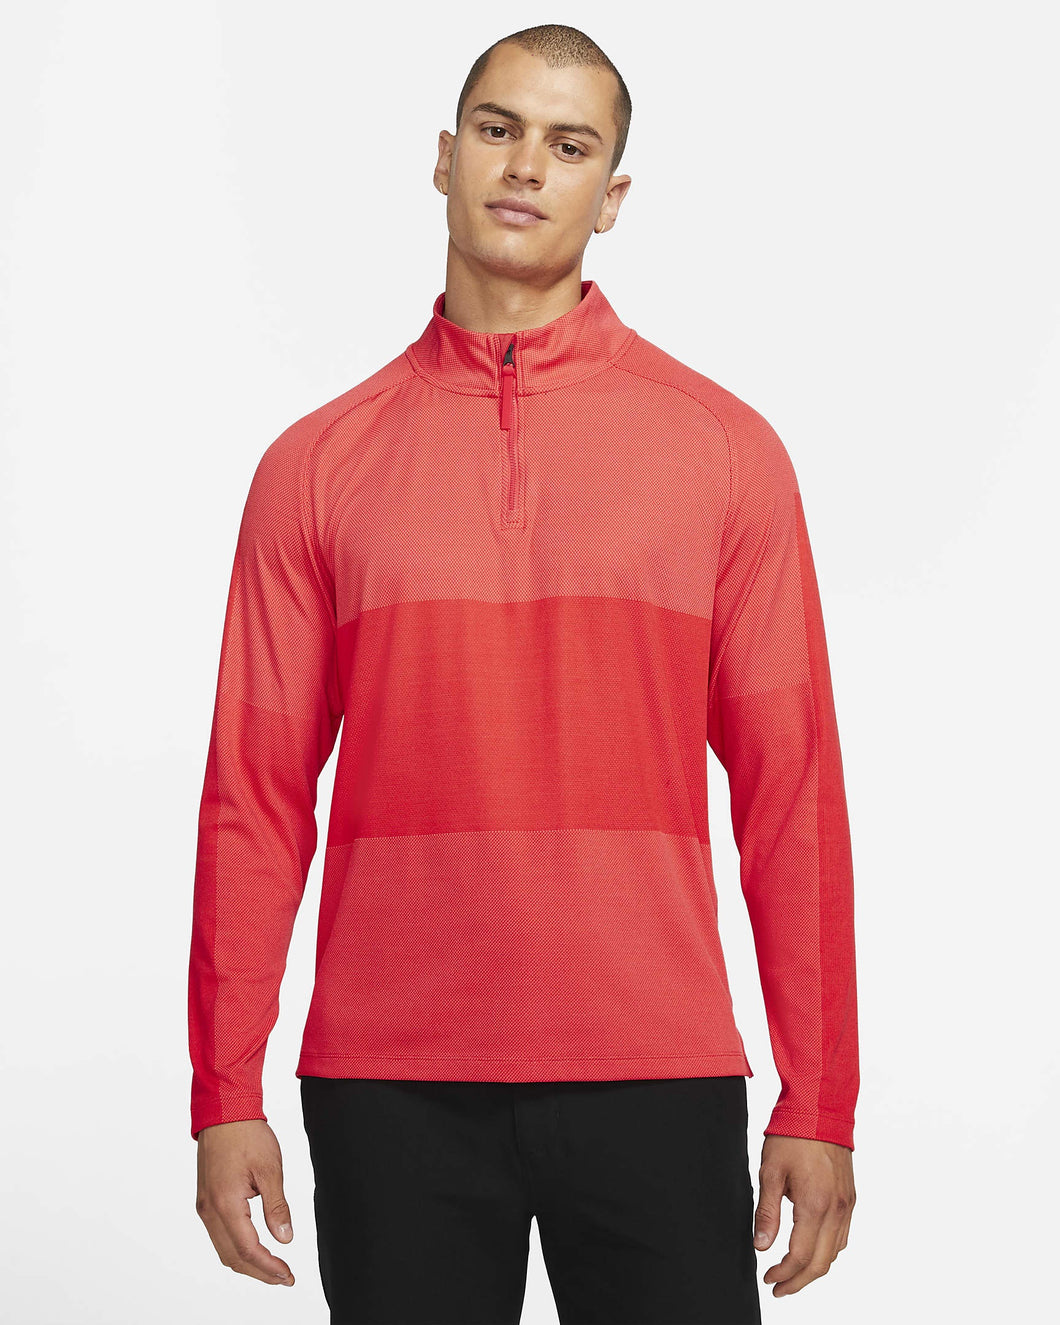 Nike Men's Dri-FIT Vapor Red Pullover